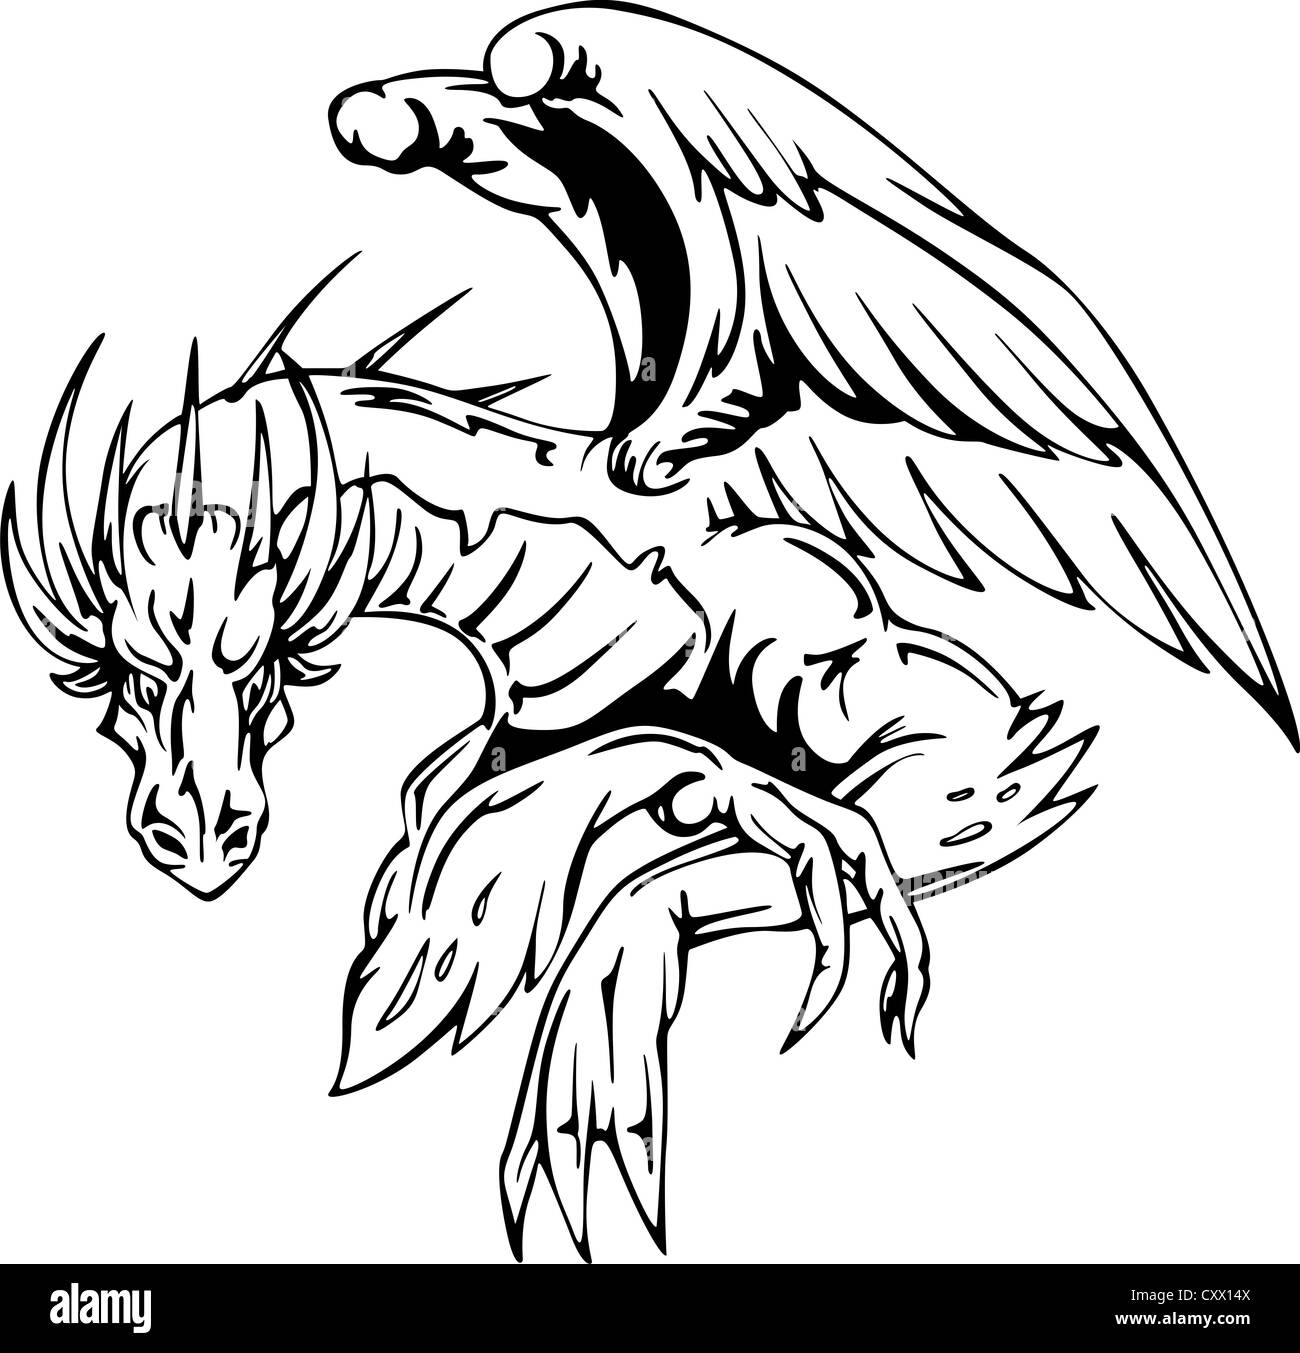 Dragon sitting - tattoo design. EPS vector illustration. Stock Photo